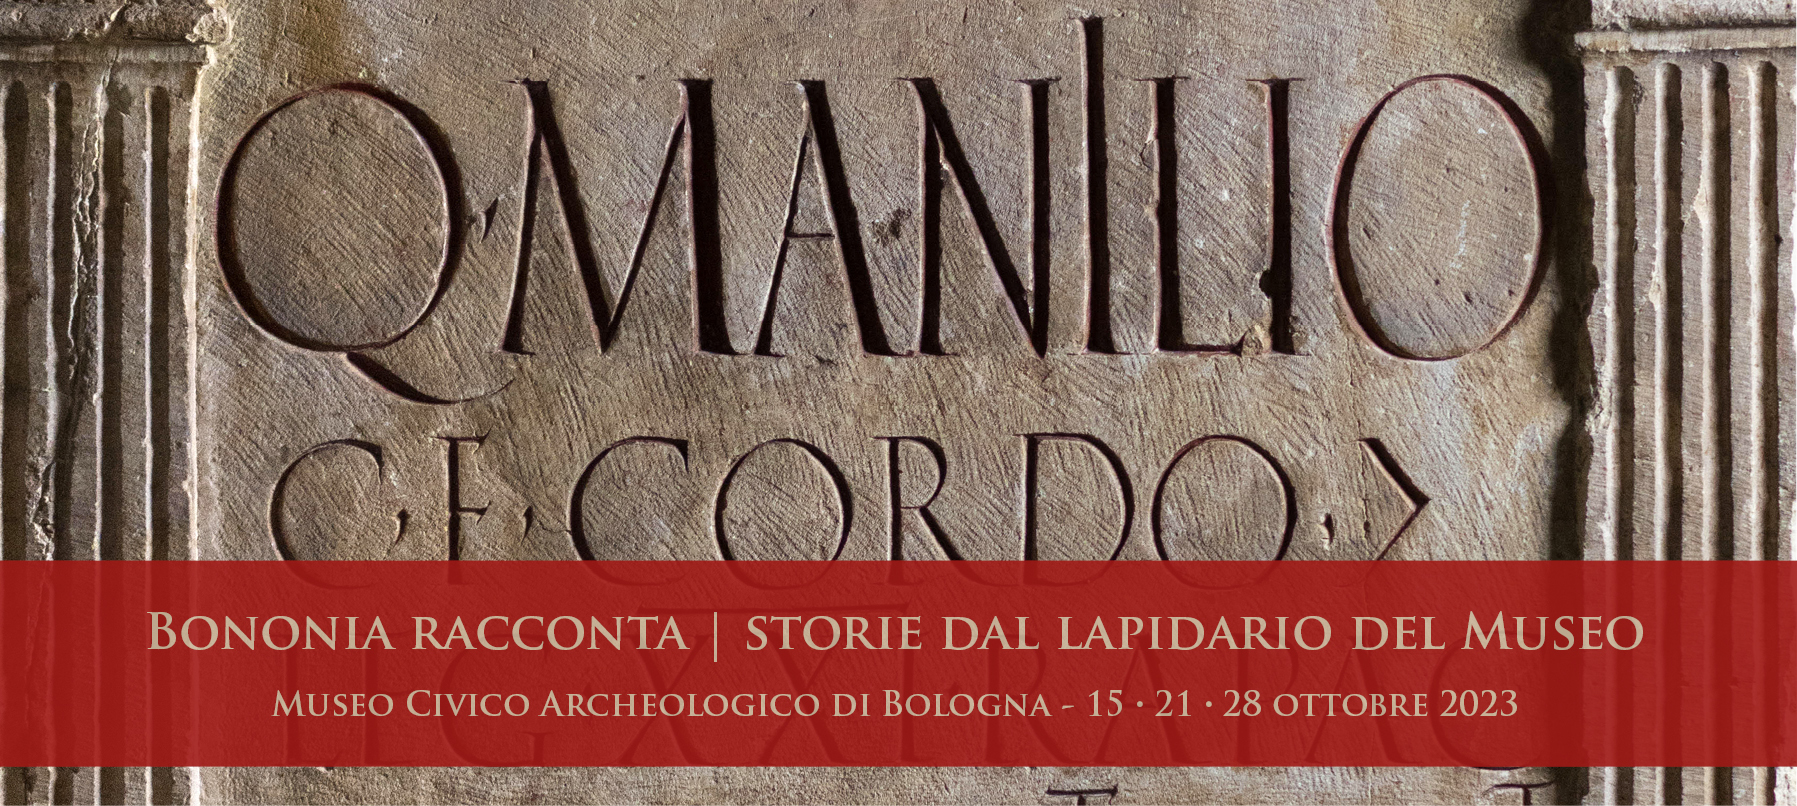 BONONIA RACCONTA | Storie dal lapidario del Museo